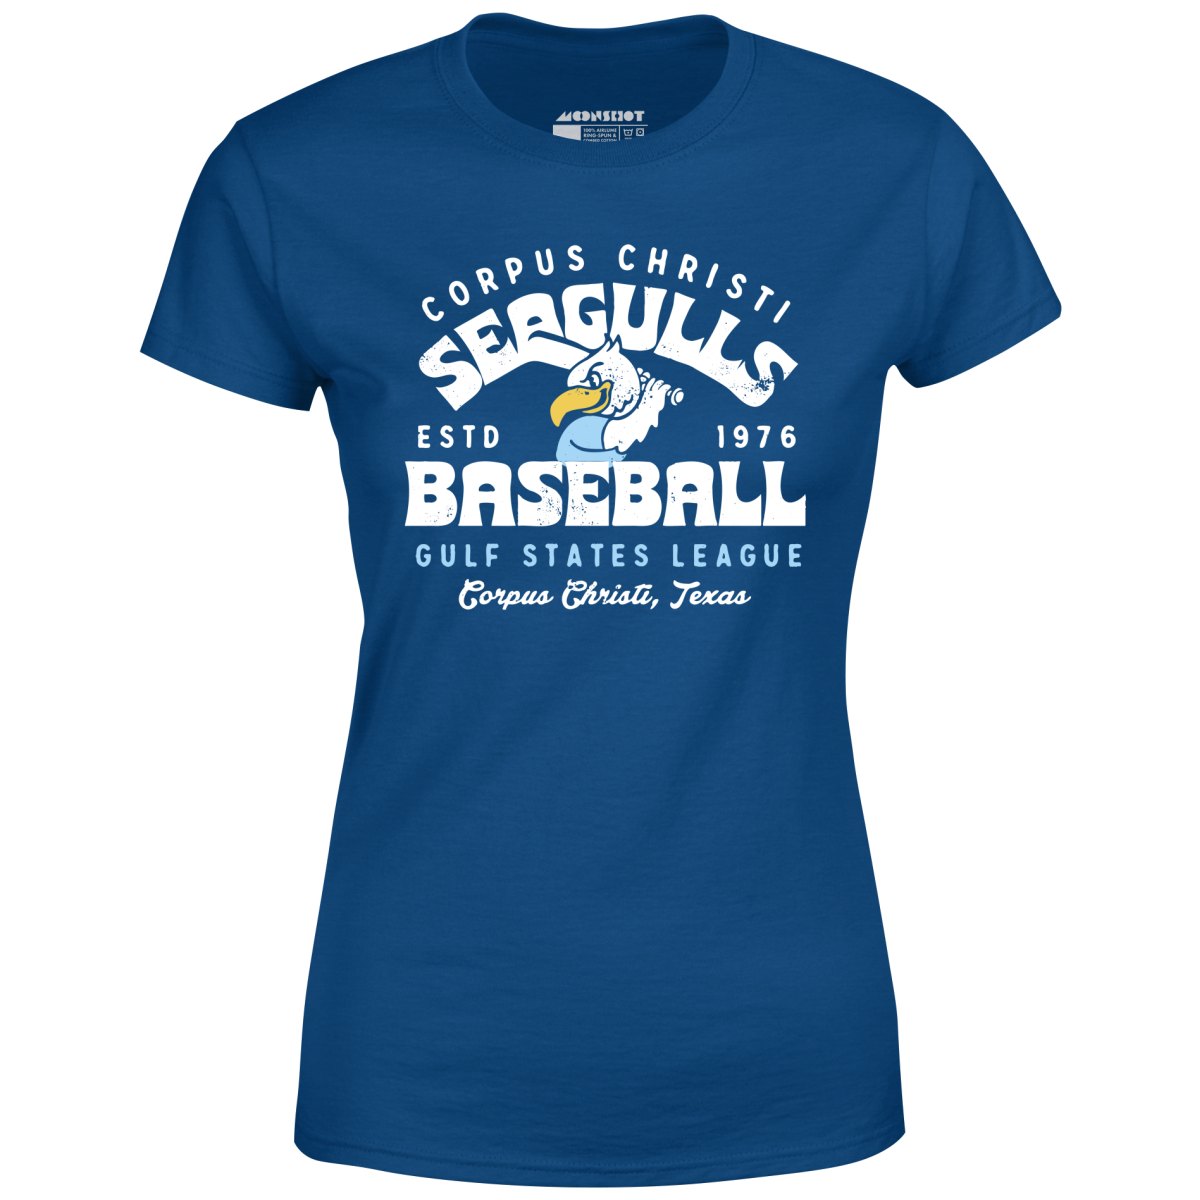 Corpus Christi Seagulls - Texas - Vintage Defunct Baseball Teams - Women's T-Shirt